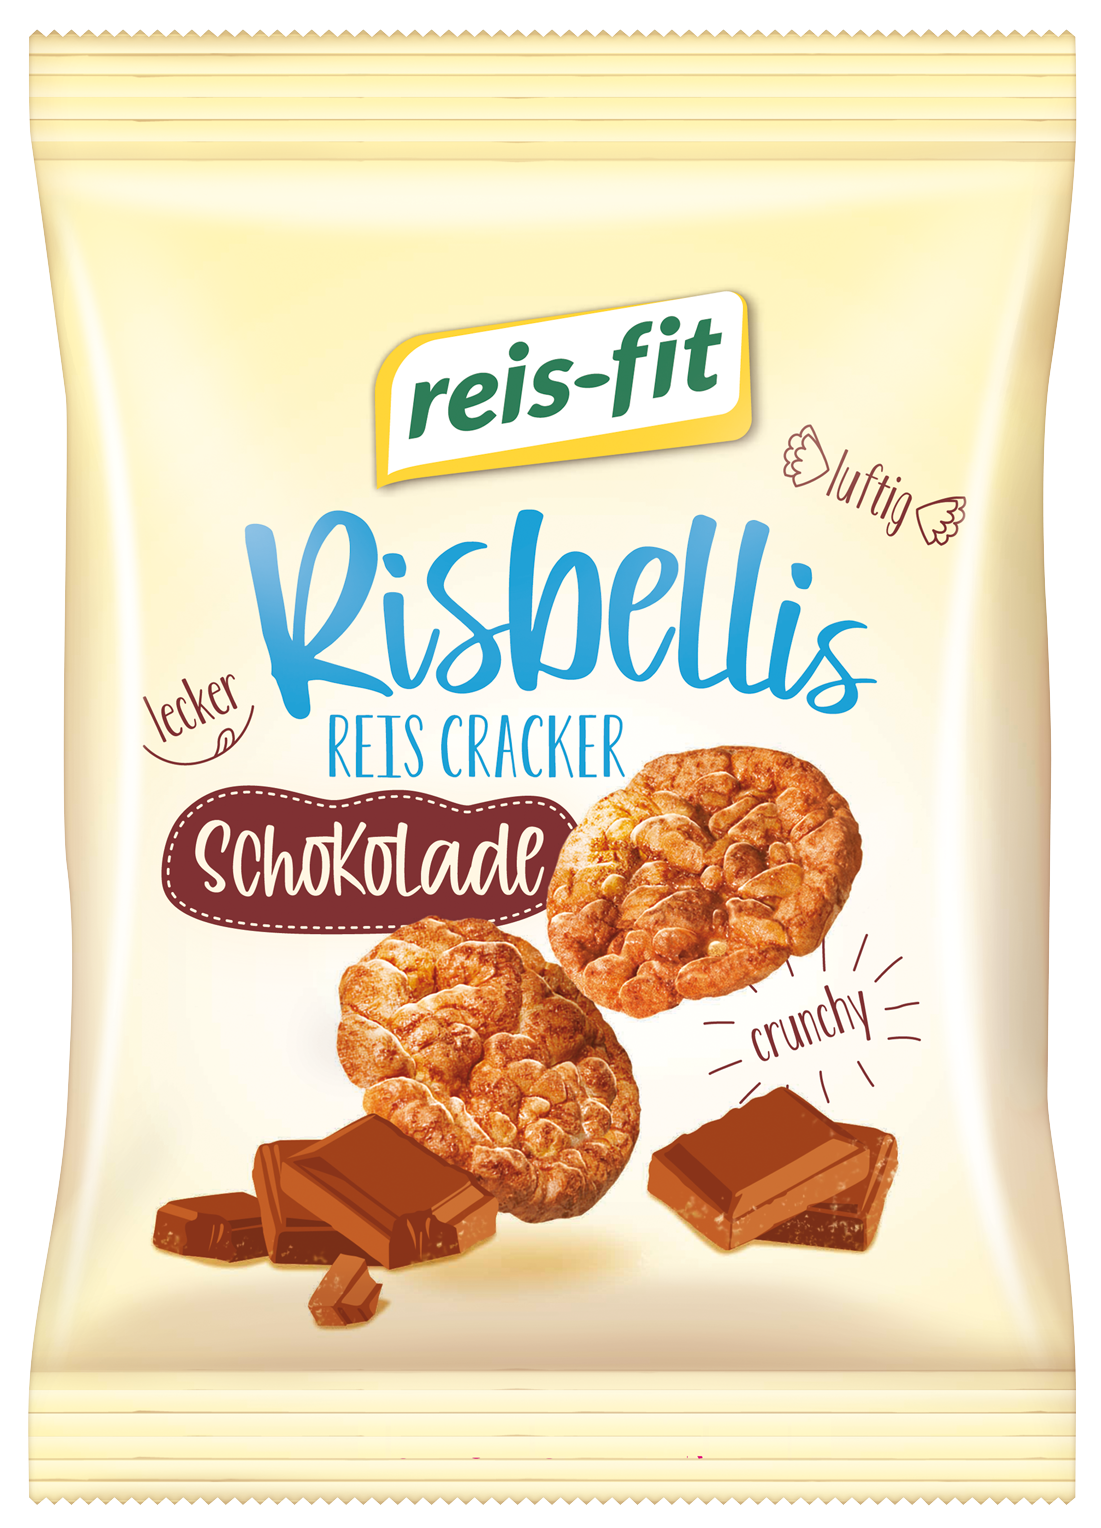 reis-fit Risbellis Schokolade 40g | Snacks | Reis | Reiskontor